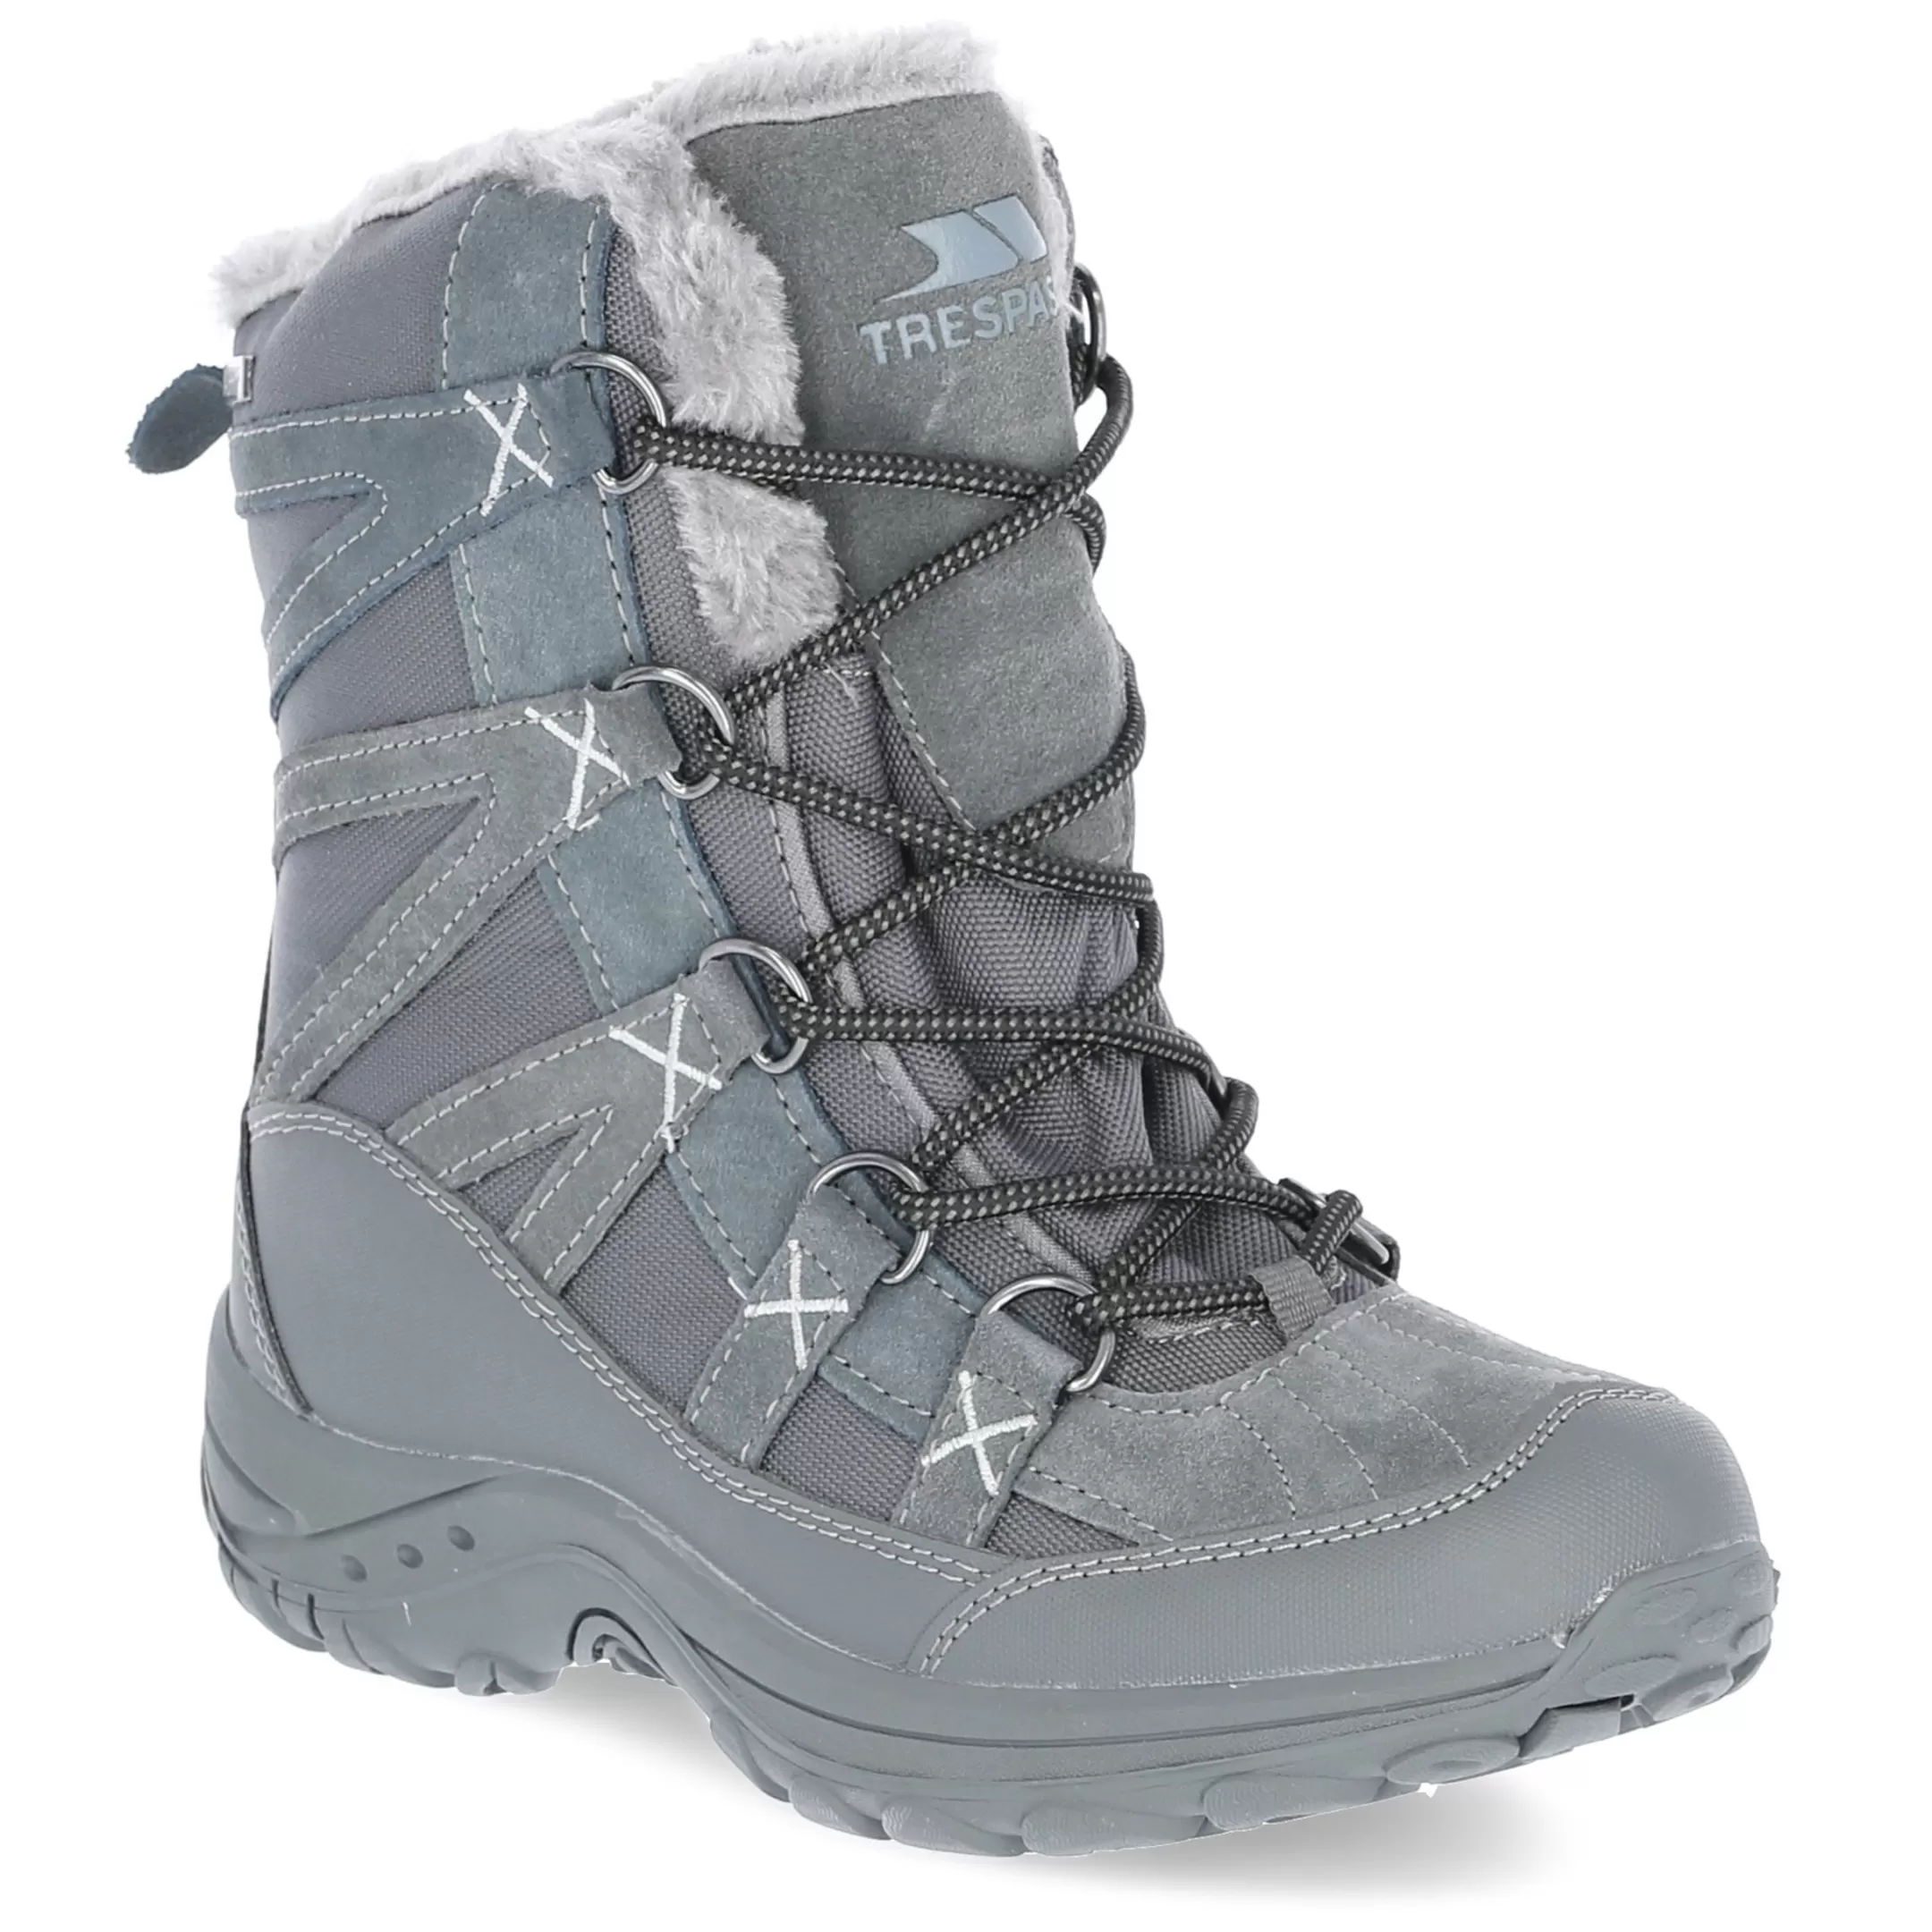 Womens Insulated Waterproof Snow Boots Zofia | Trespass Shop